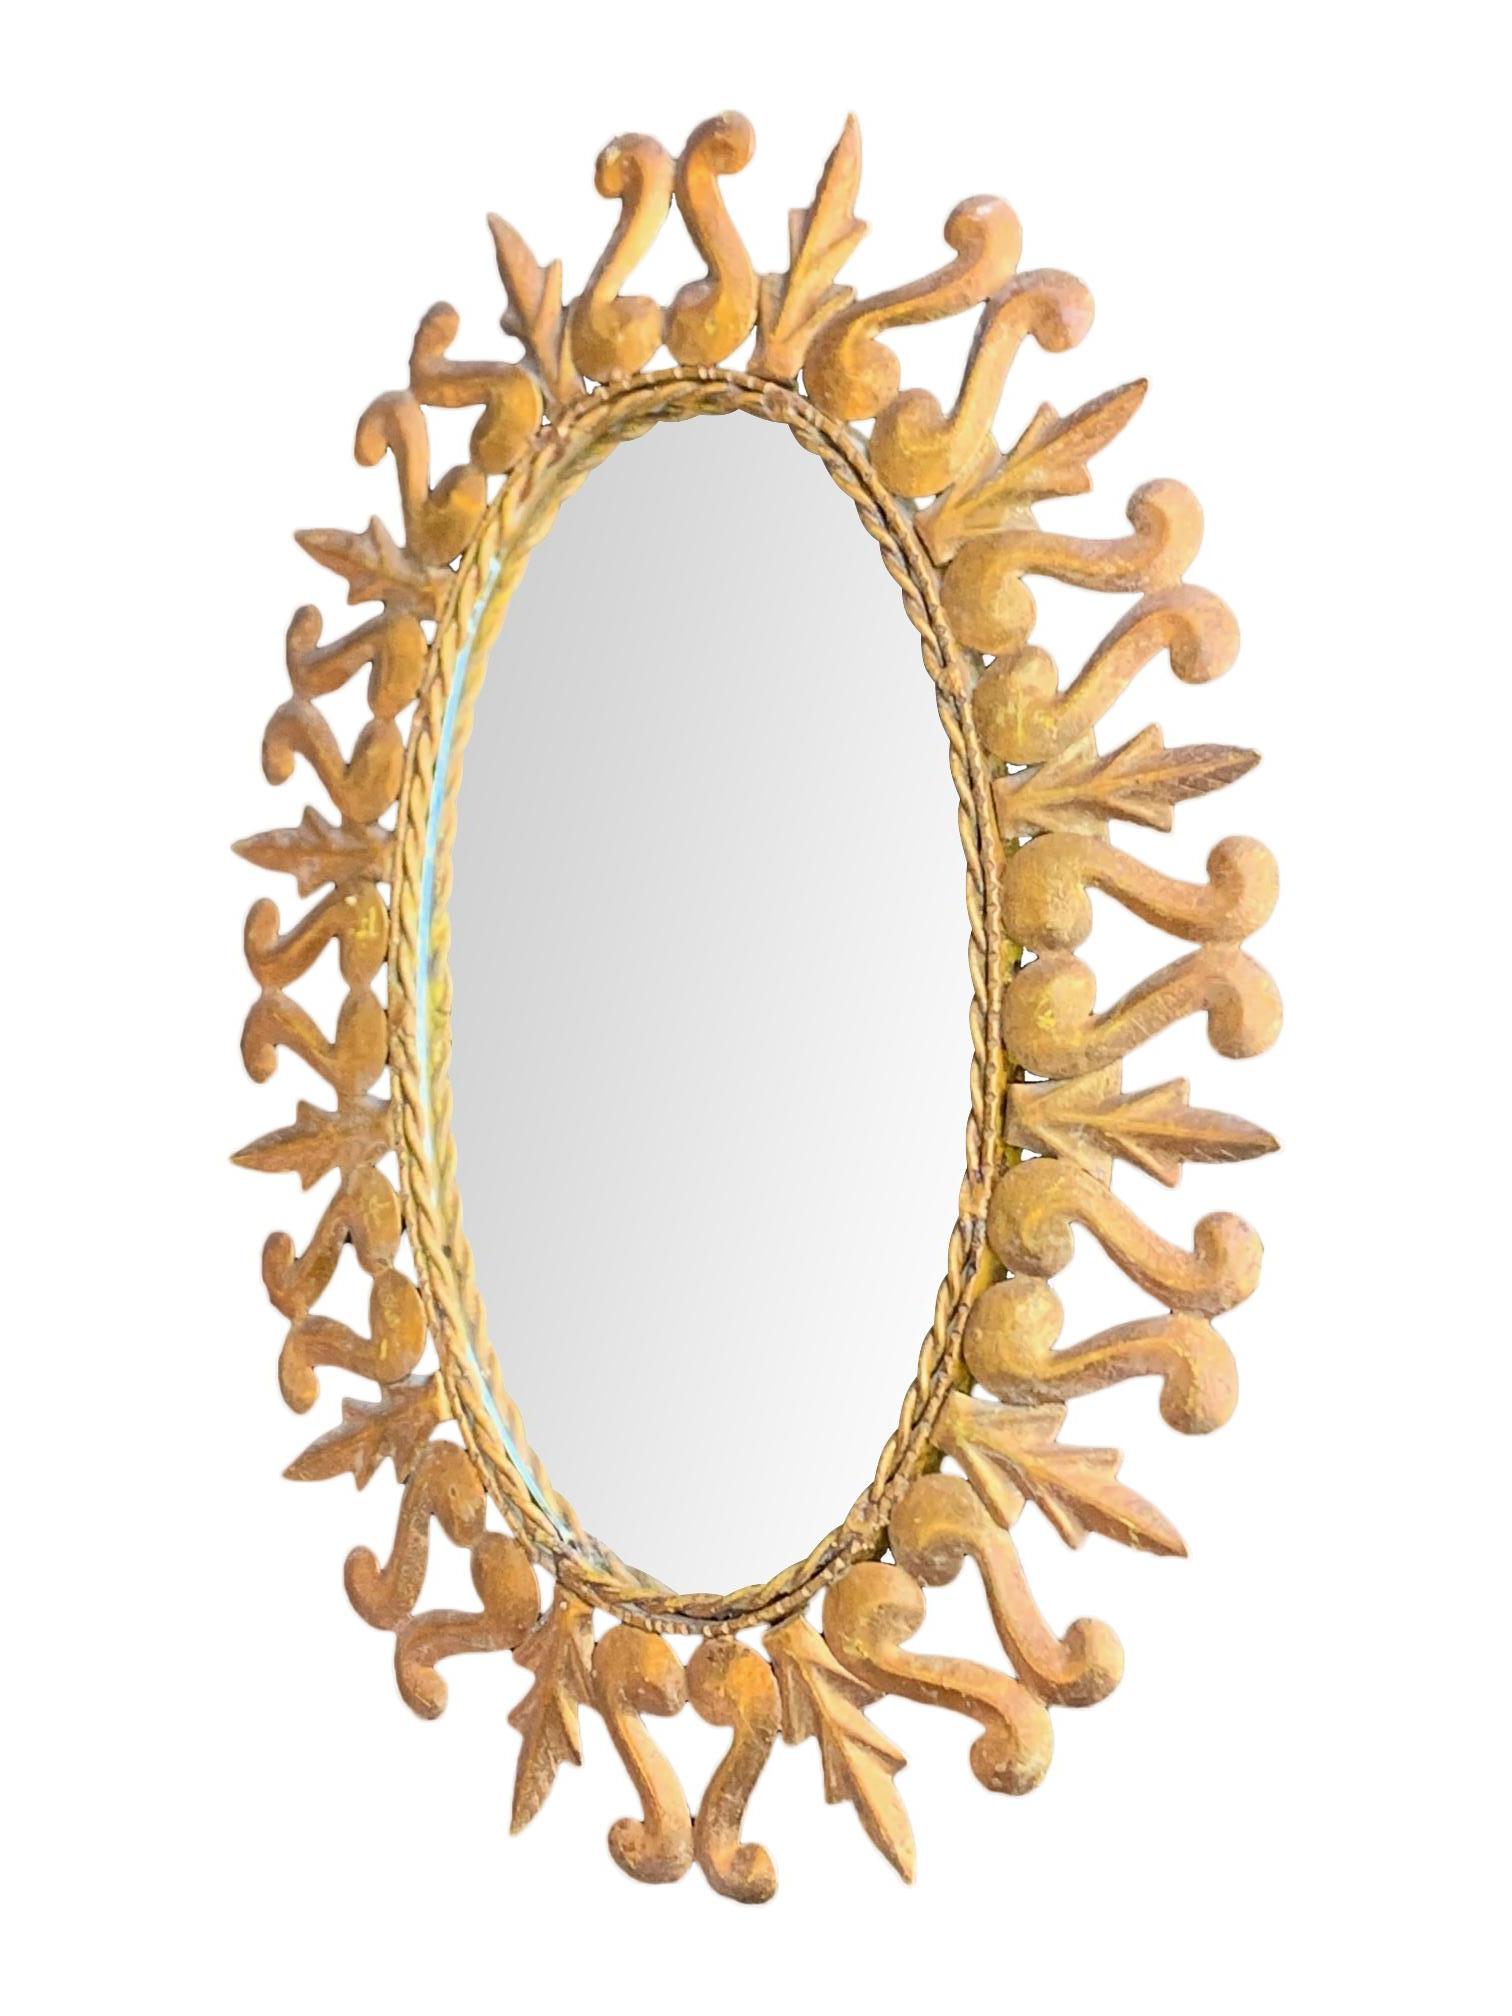 Mid-20th Century Lovely Spanish Ornate Gilt Metal Oval Sunburst Wall Mirror